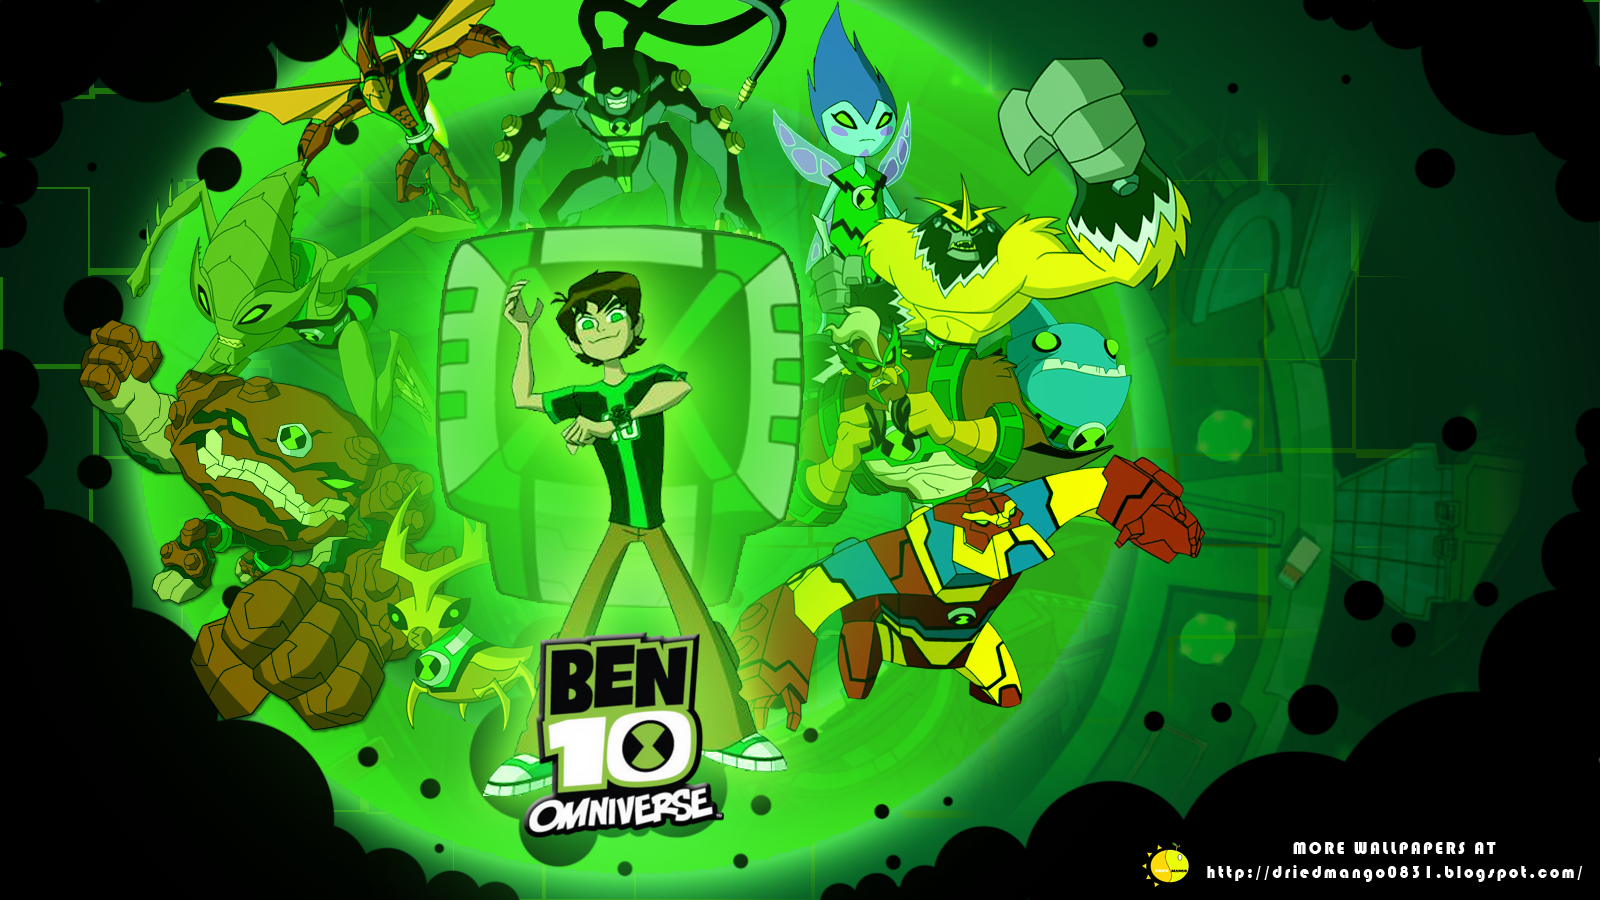 ben 10 omniverse wallpaper,green,cartoon,illustration,fictional character,graphic design